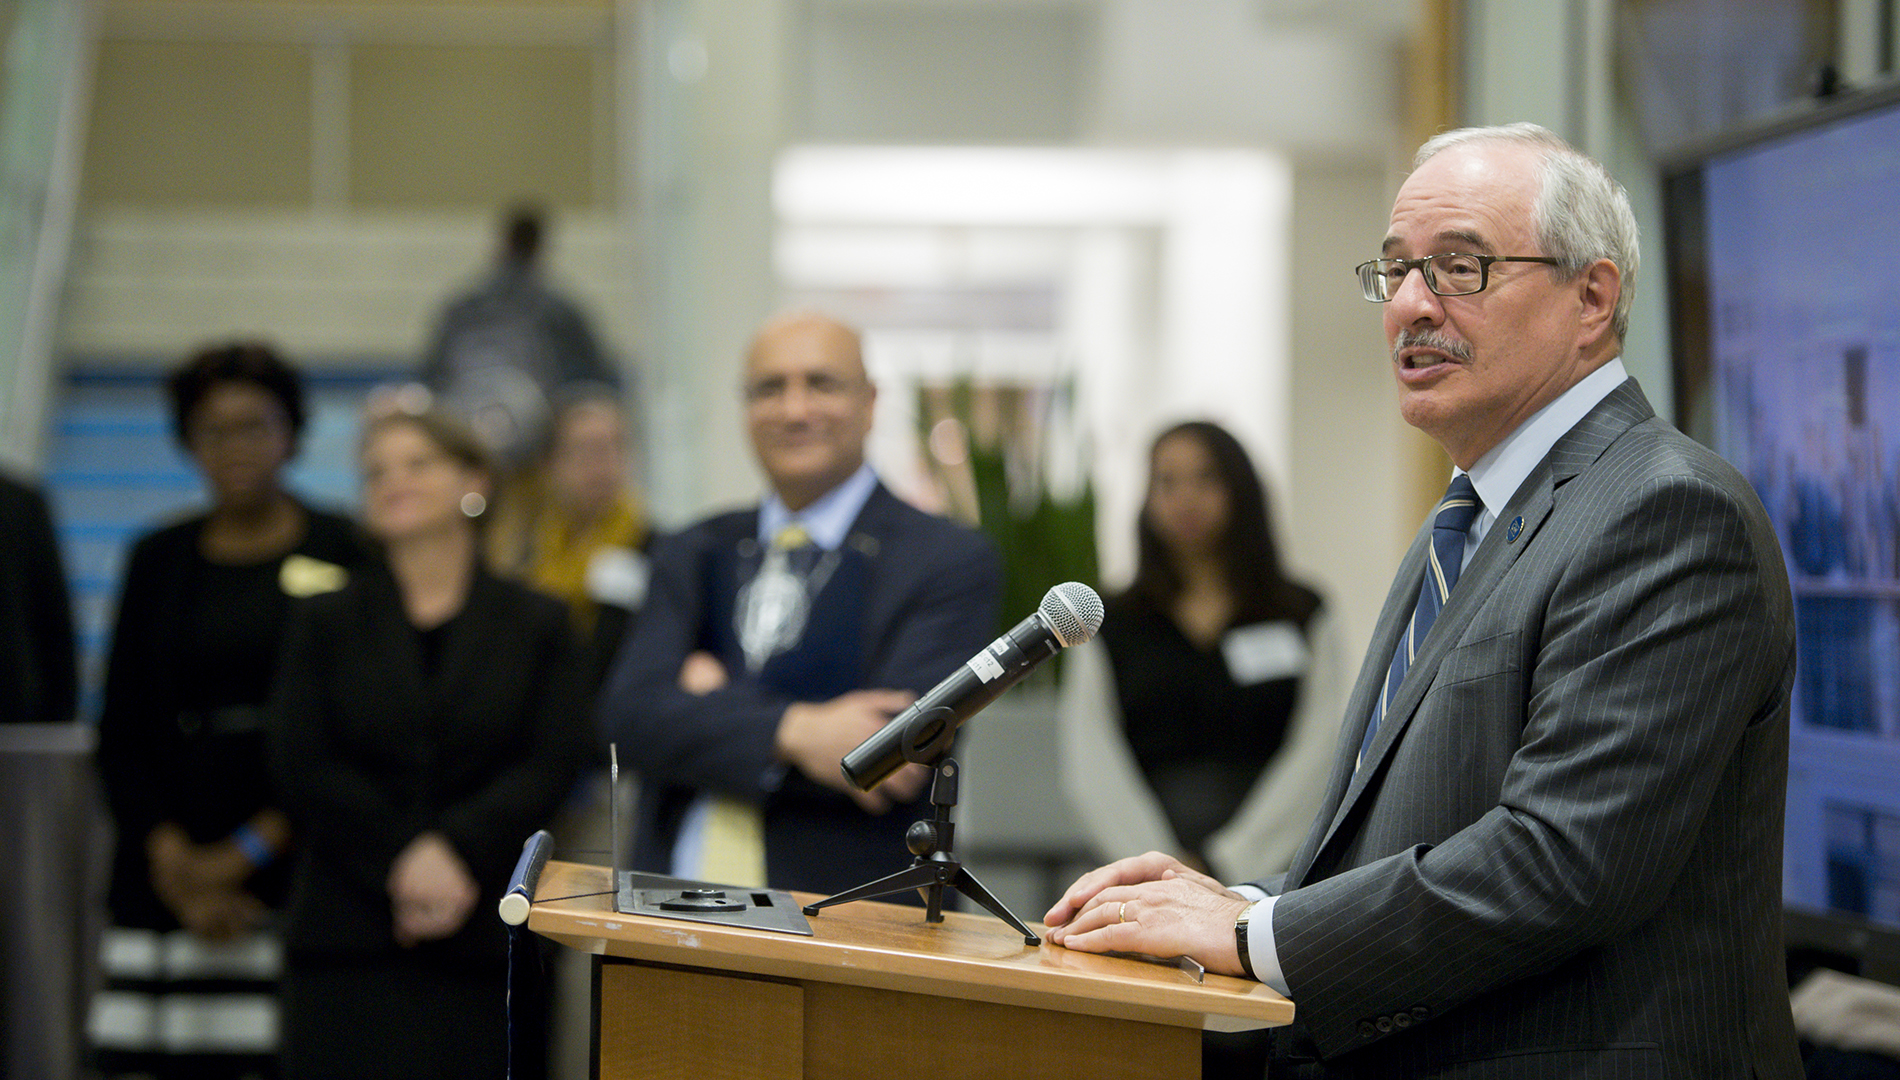 photo - GW President Thomas LeBlanc speaks at the CAP 10-year anniversary event